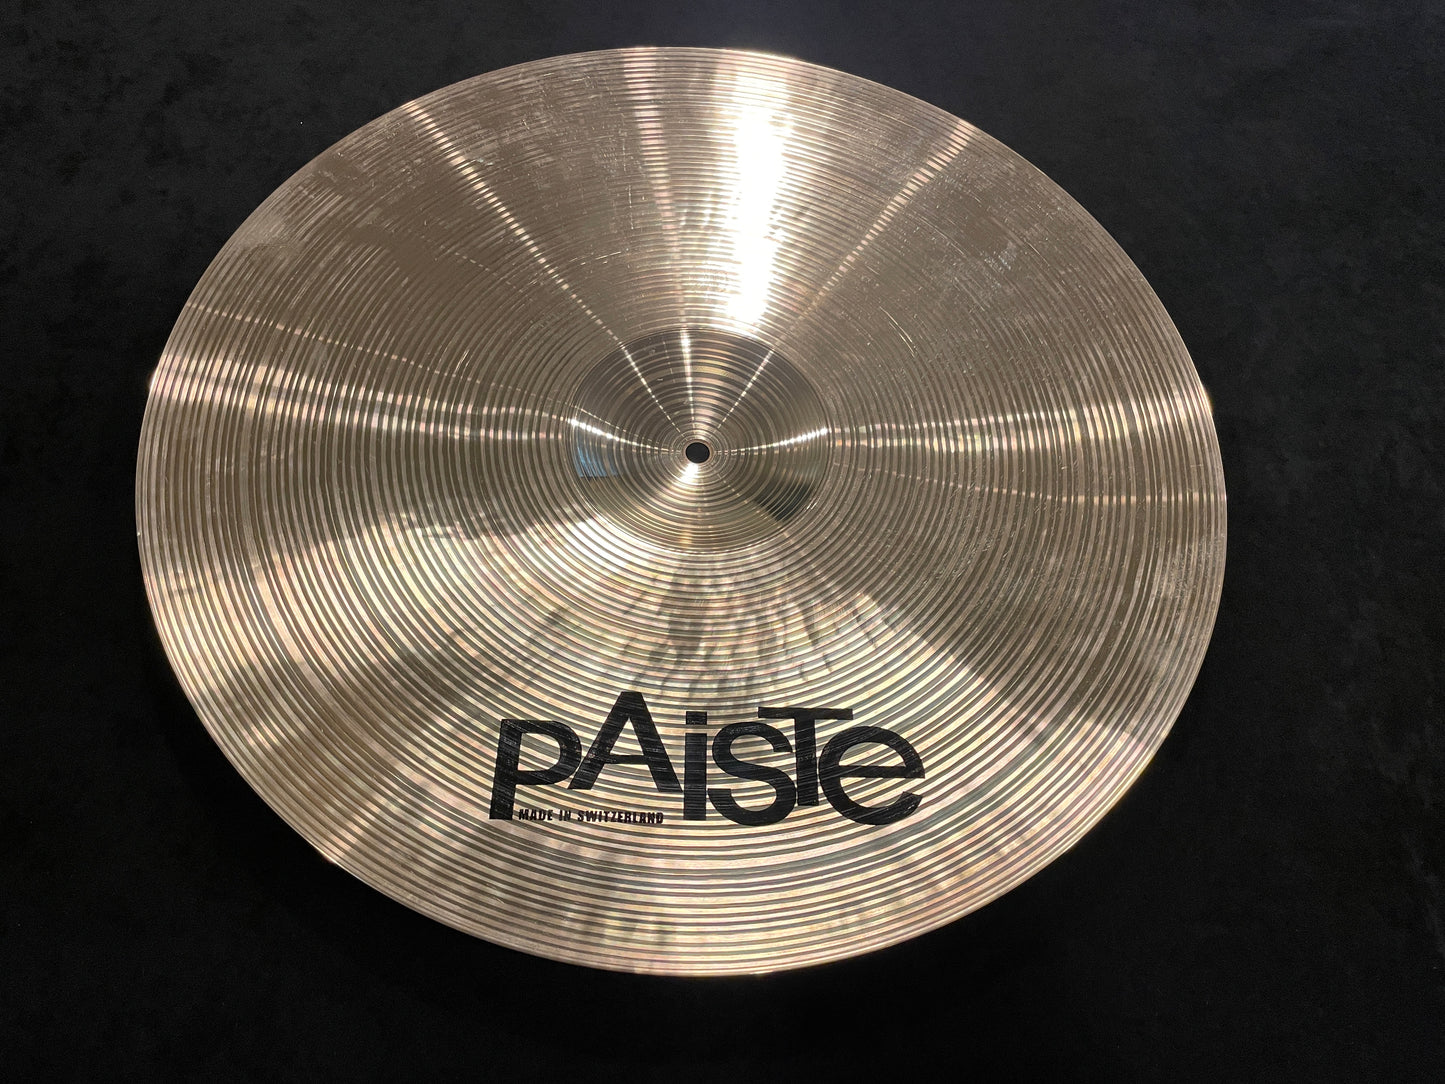 20" Paiste Signature Full Crash Cymbal 2132g